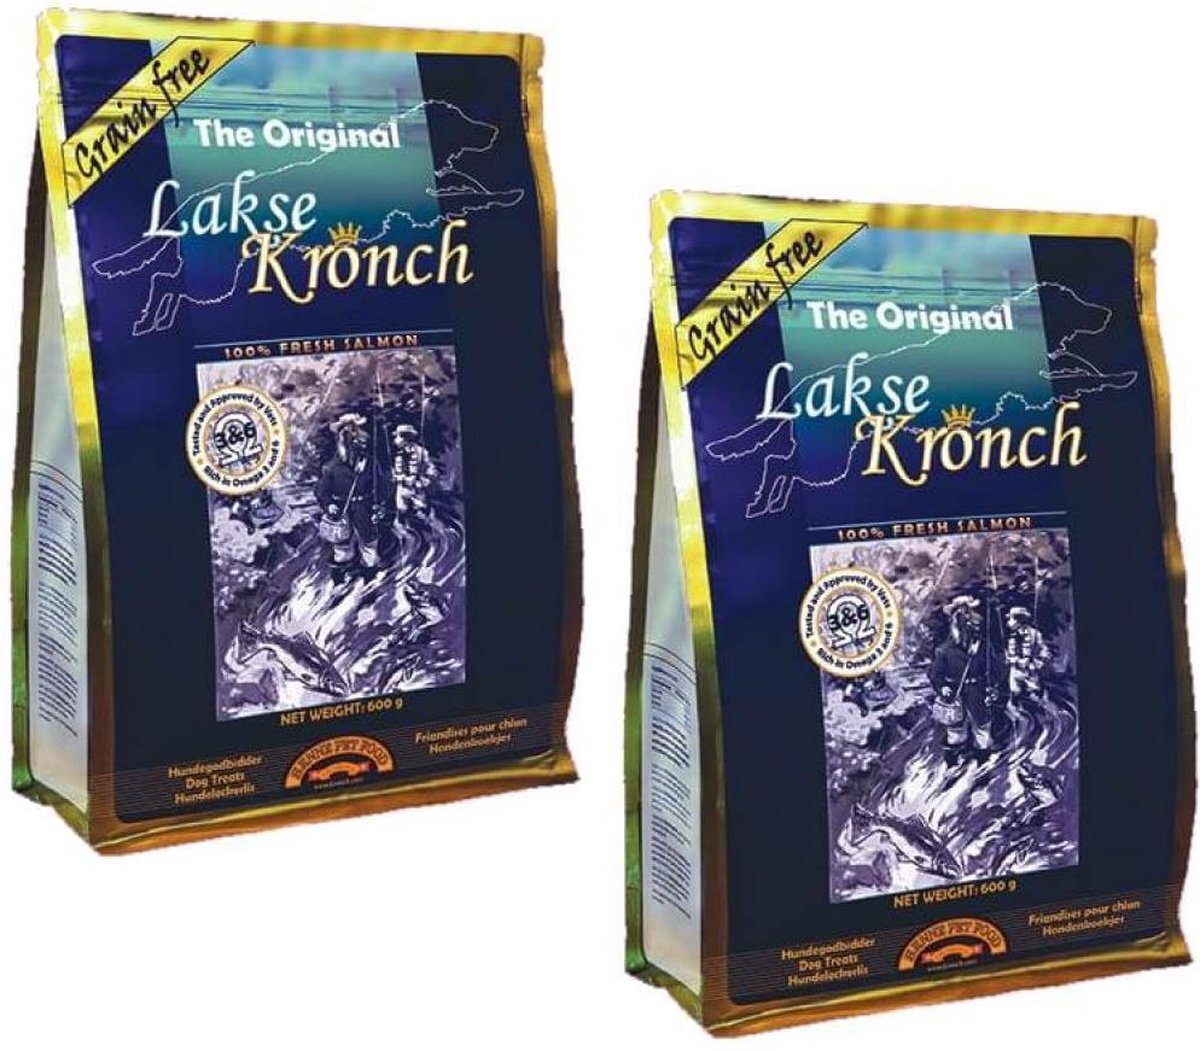 Black friday deals : Henne Lakse Kronch 100% zalmsnacks 2x600 gram